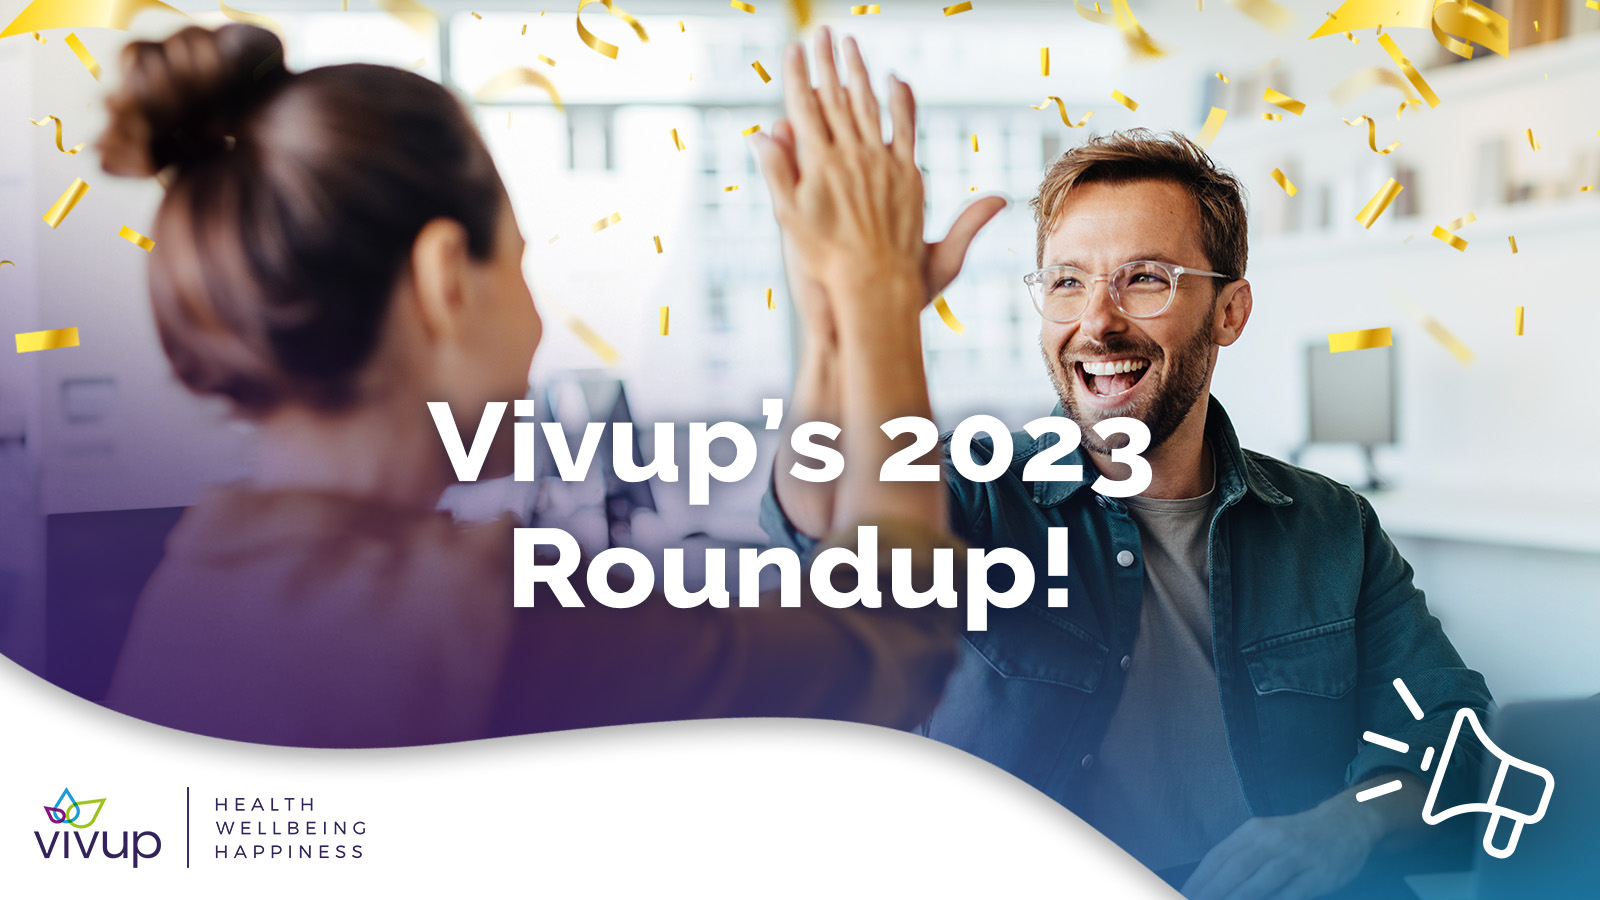 Vivup's 2023 round up